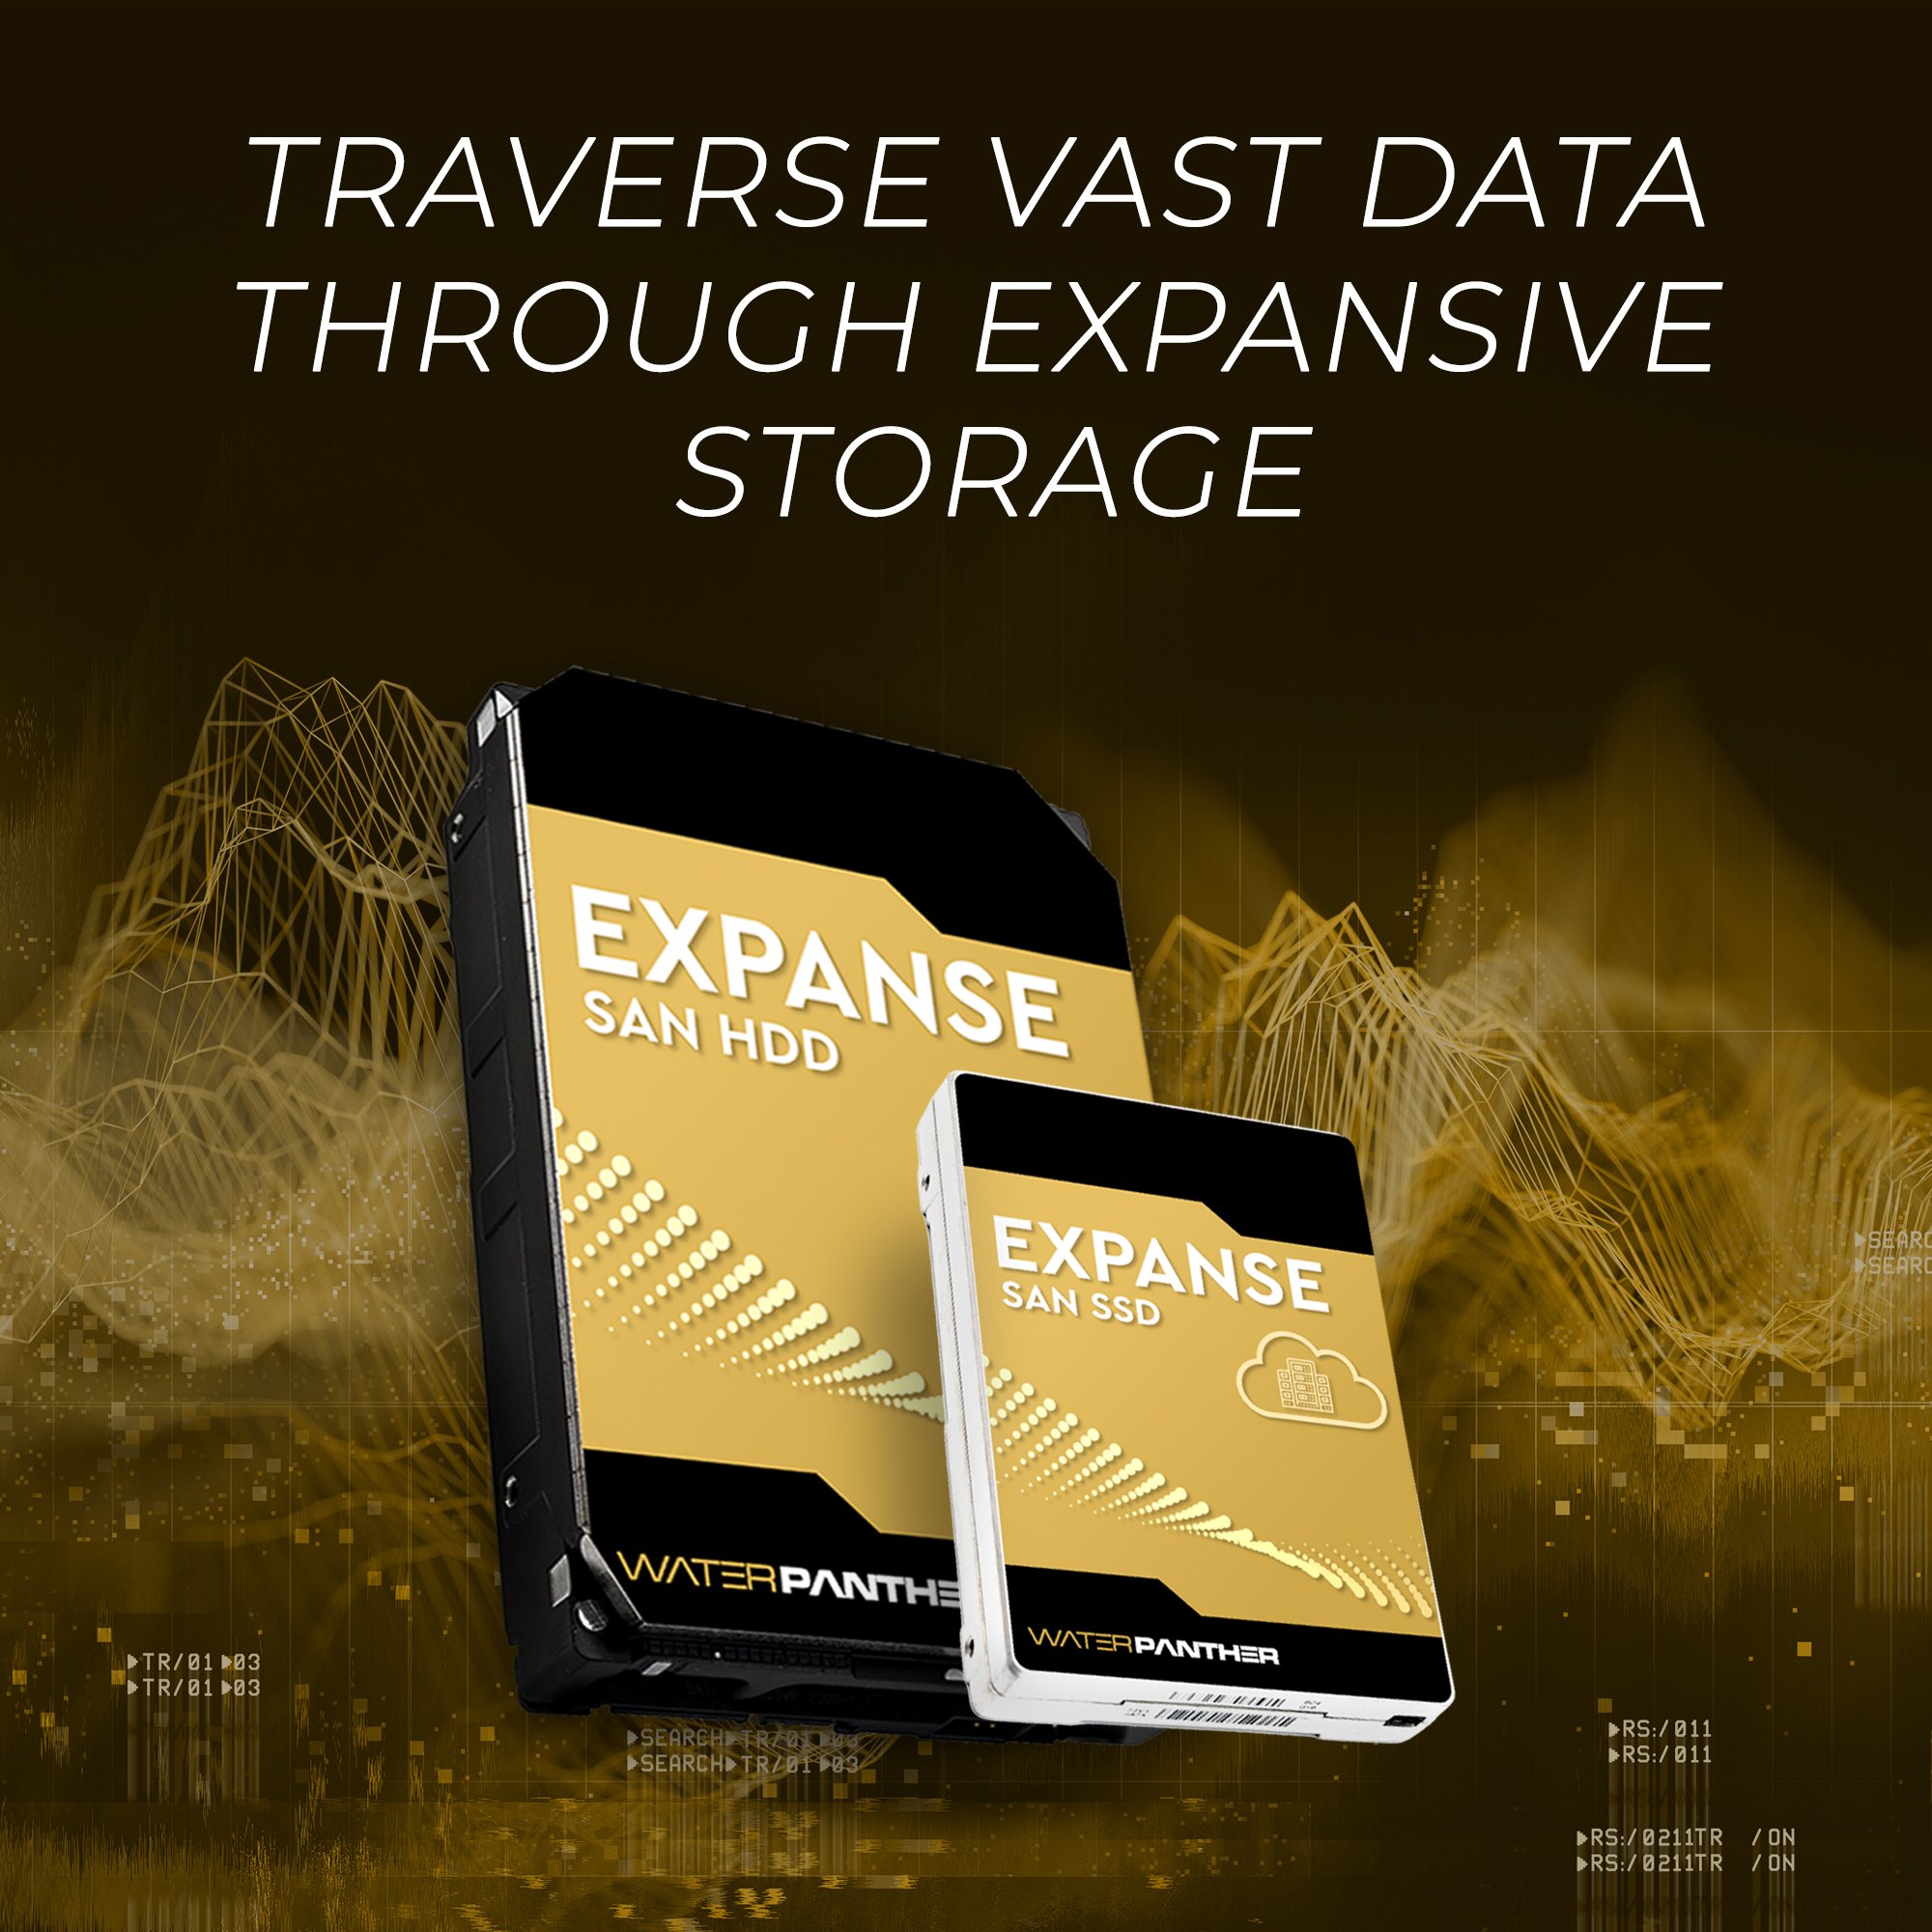 Traverse vast data through expansive storage with wp expanse san drives